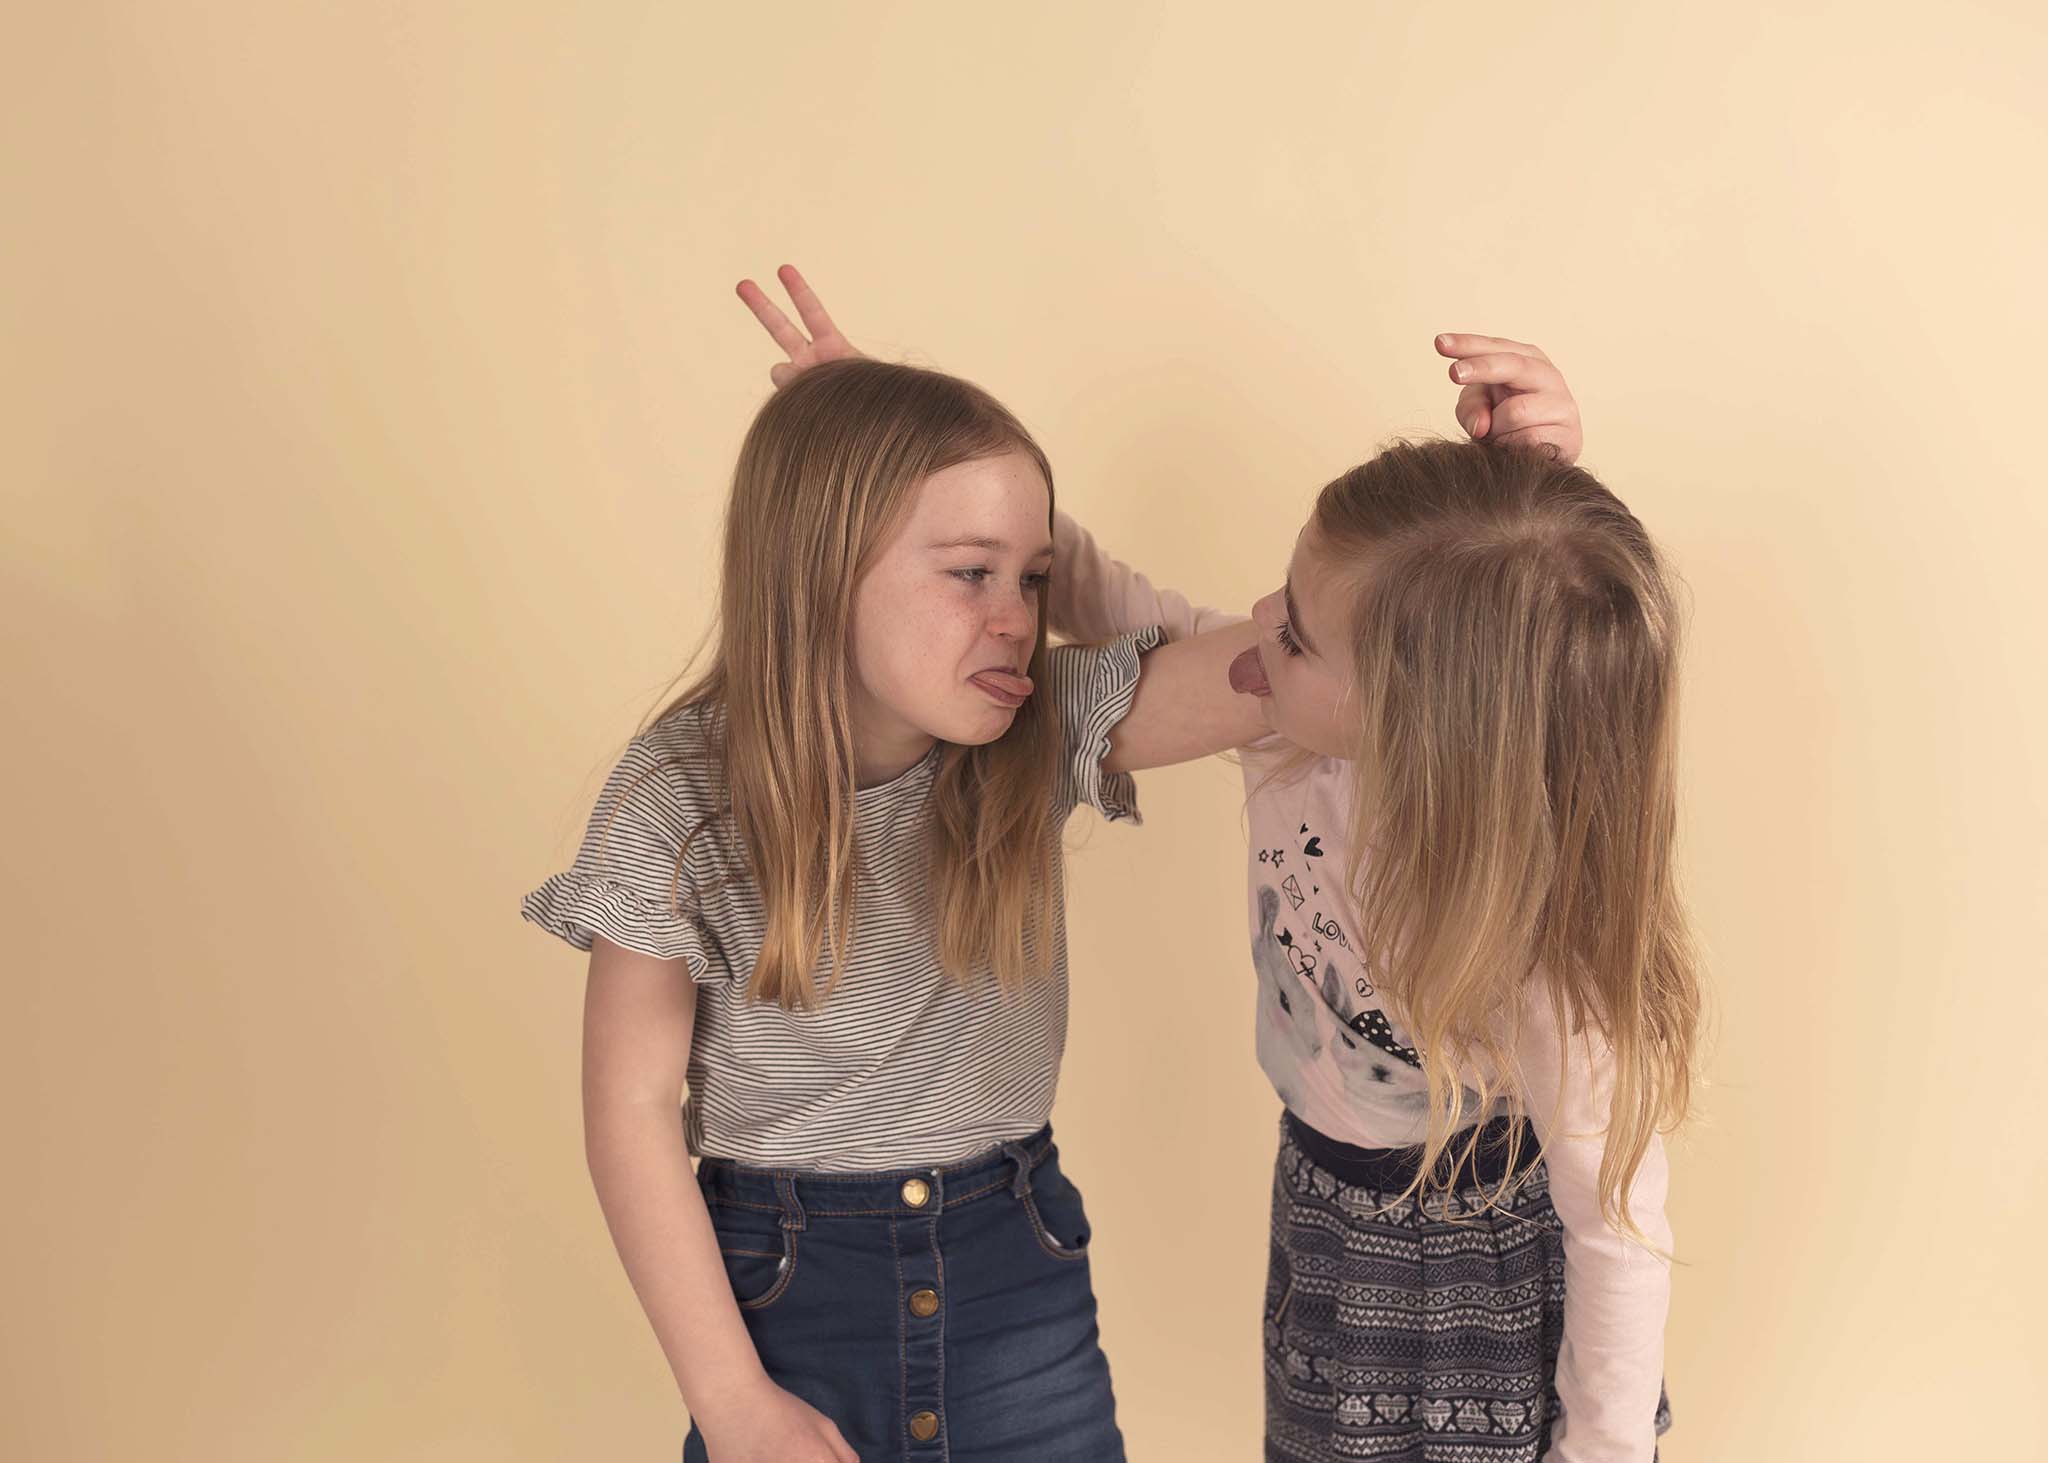 Photograph of children at Photoshoot in Edinburgh studio